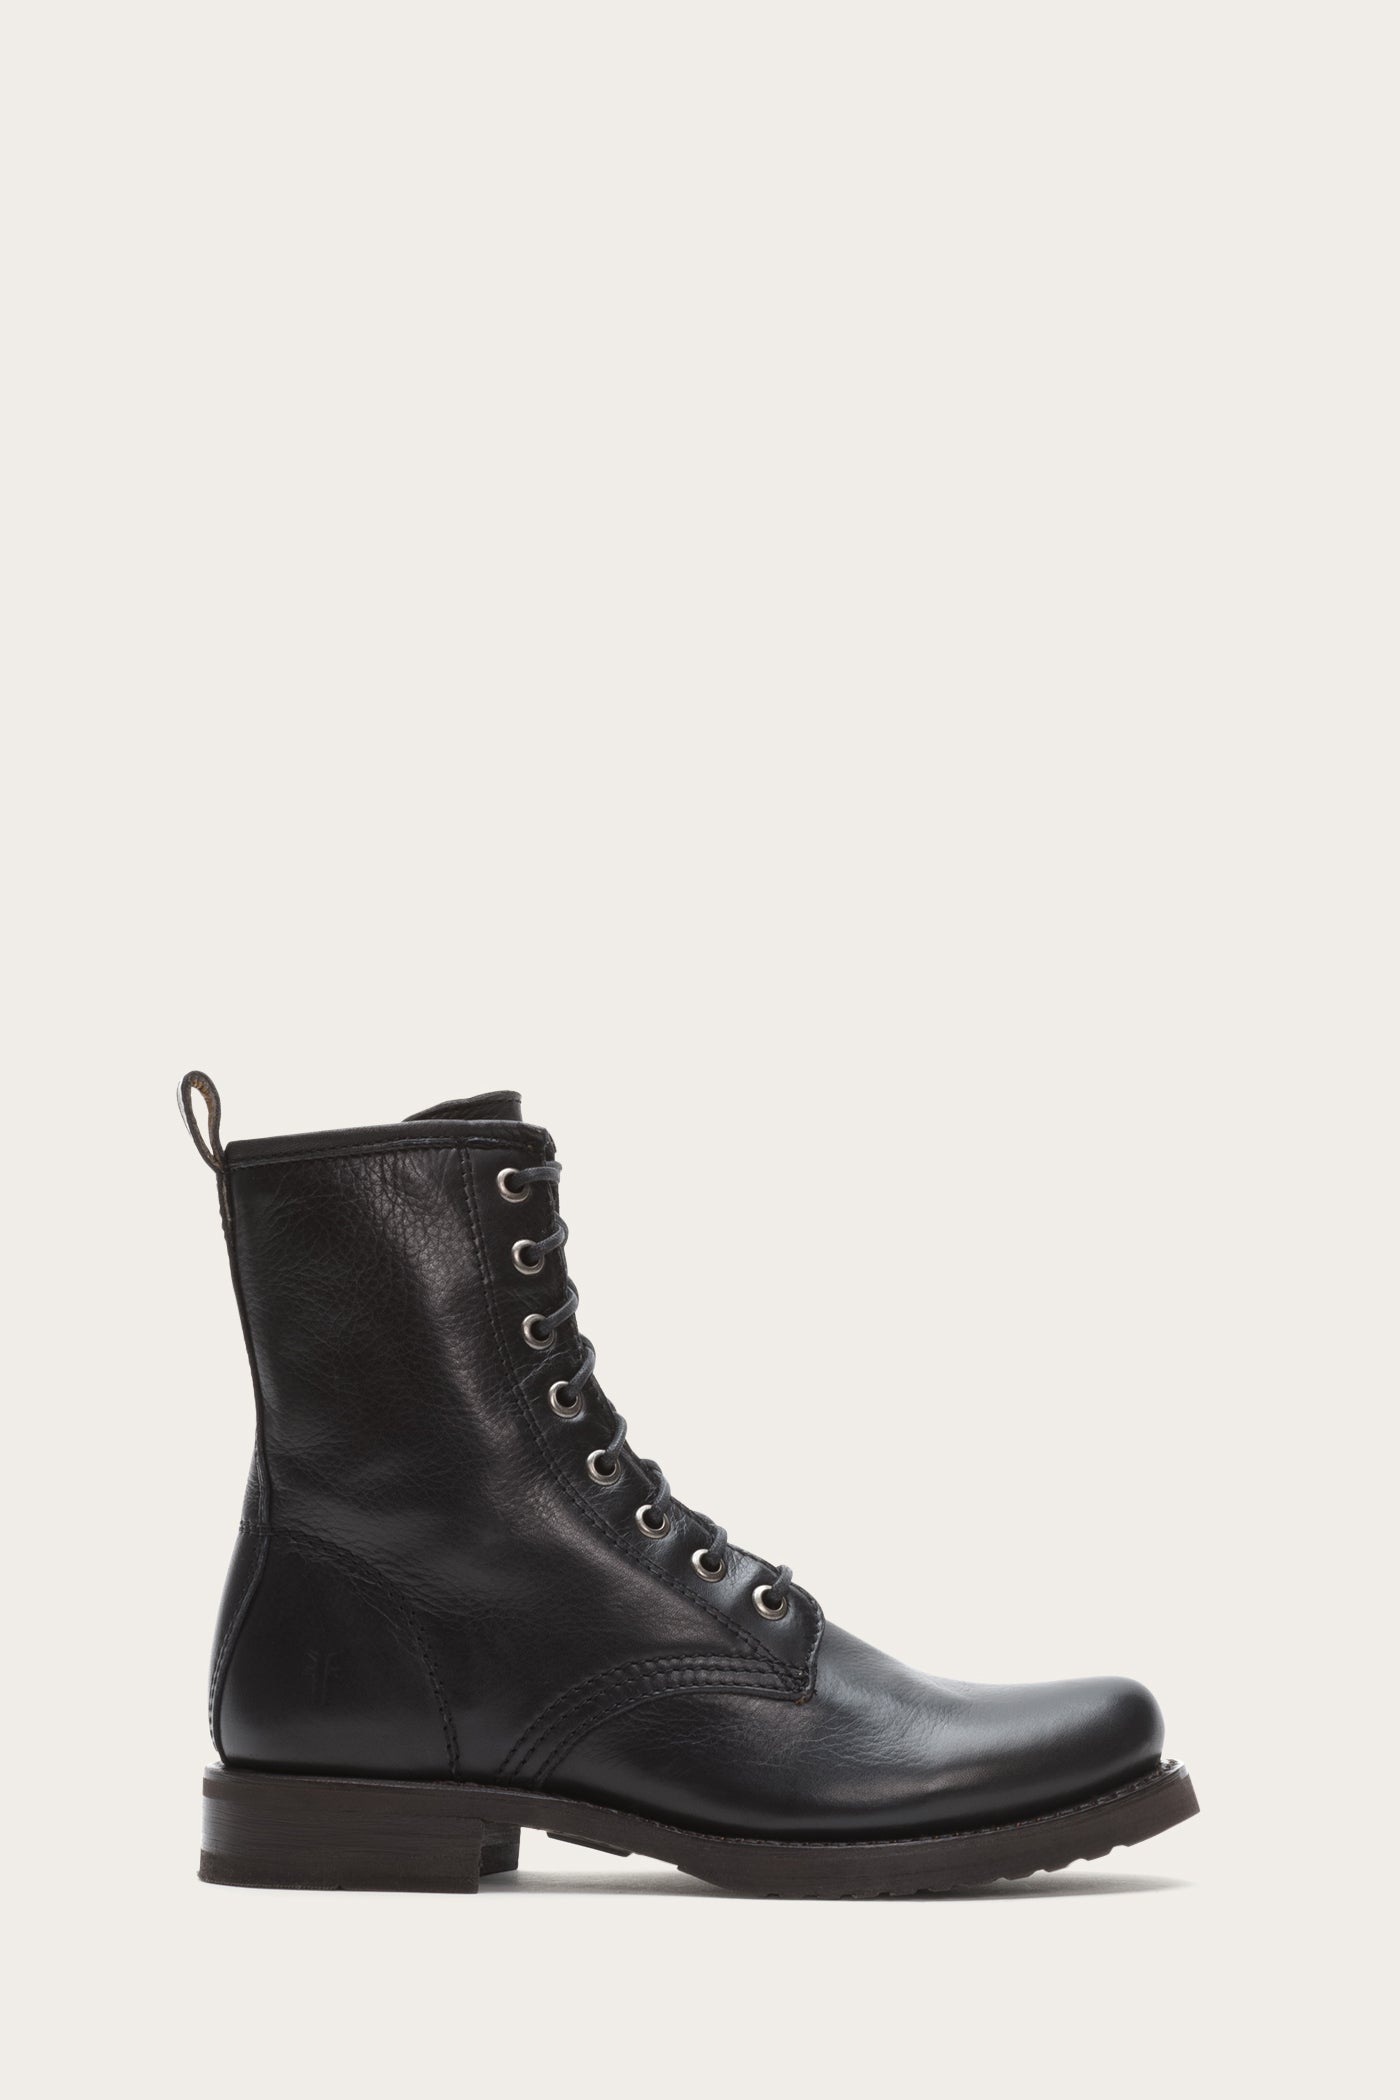 black frye boots sale